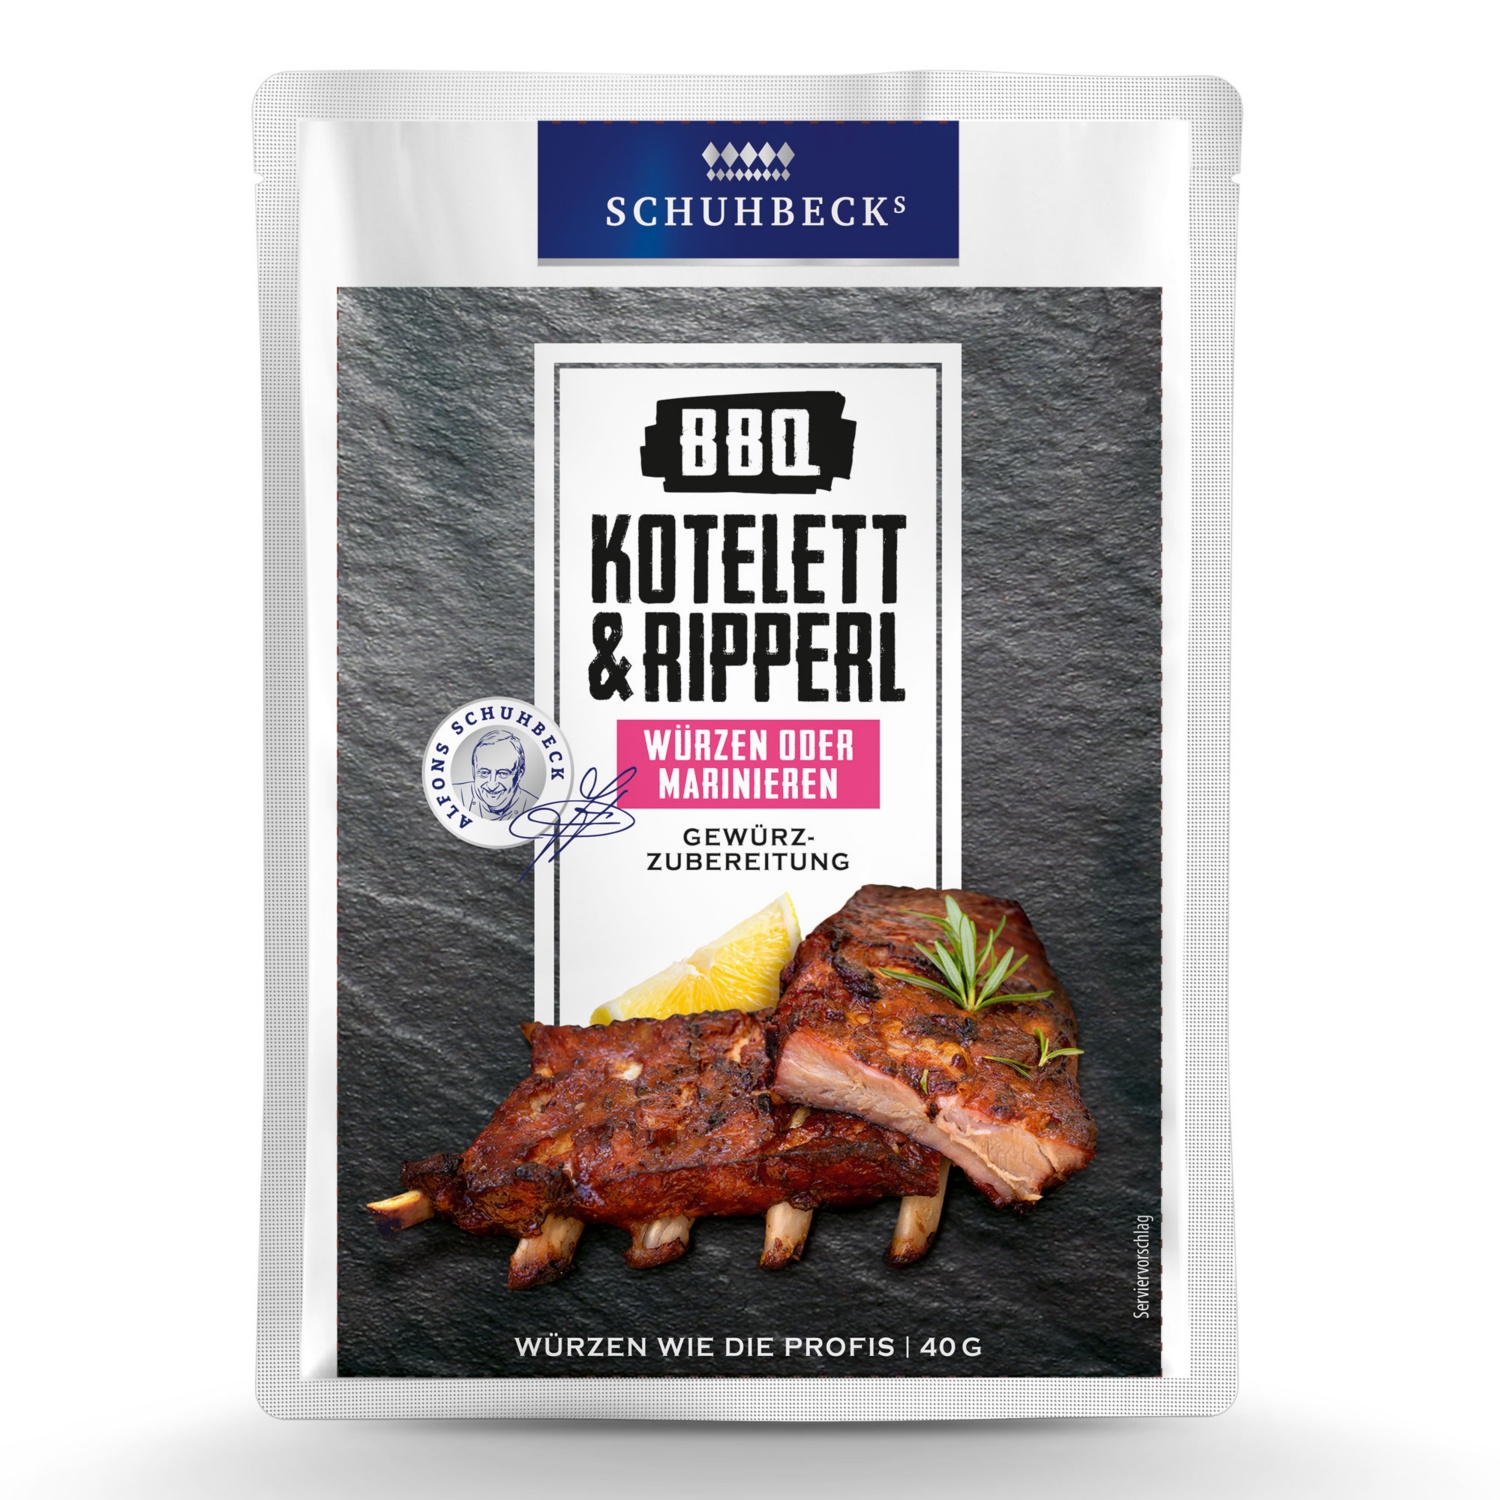 SCHUHBECK'S BBQ-Gewürze, Kotelett & Ripperl